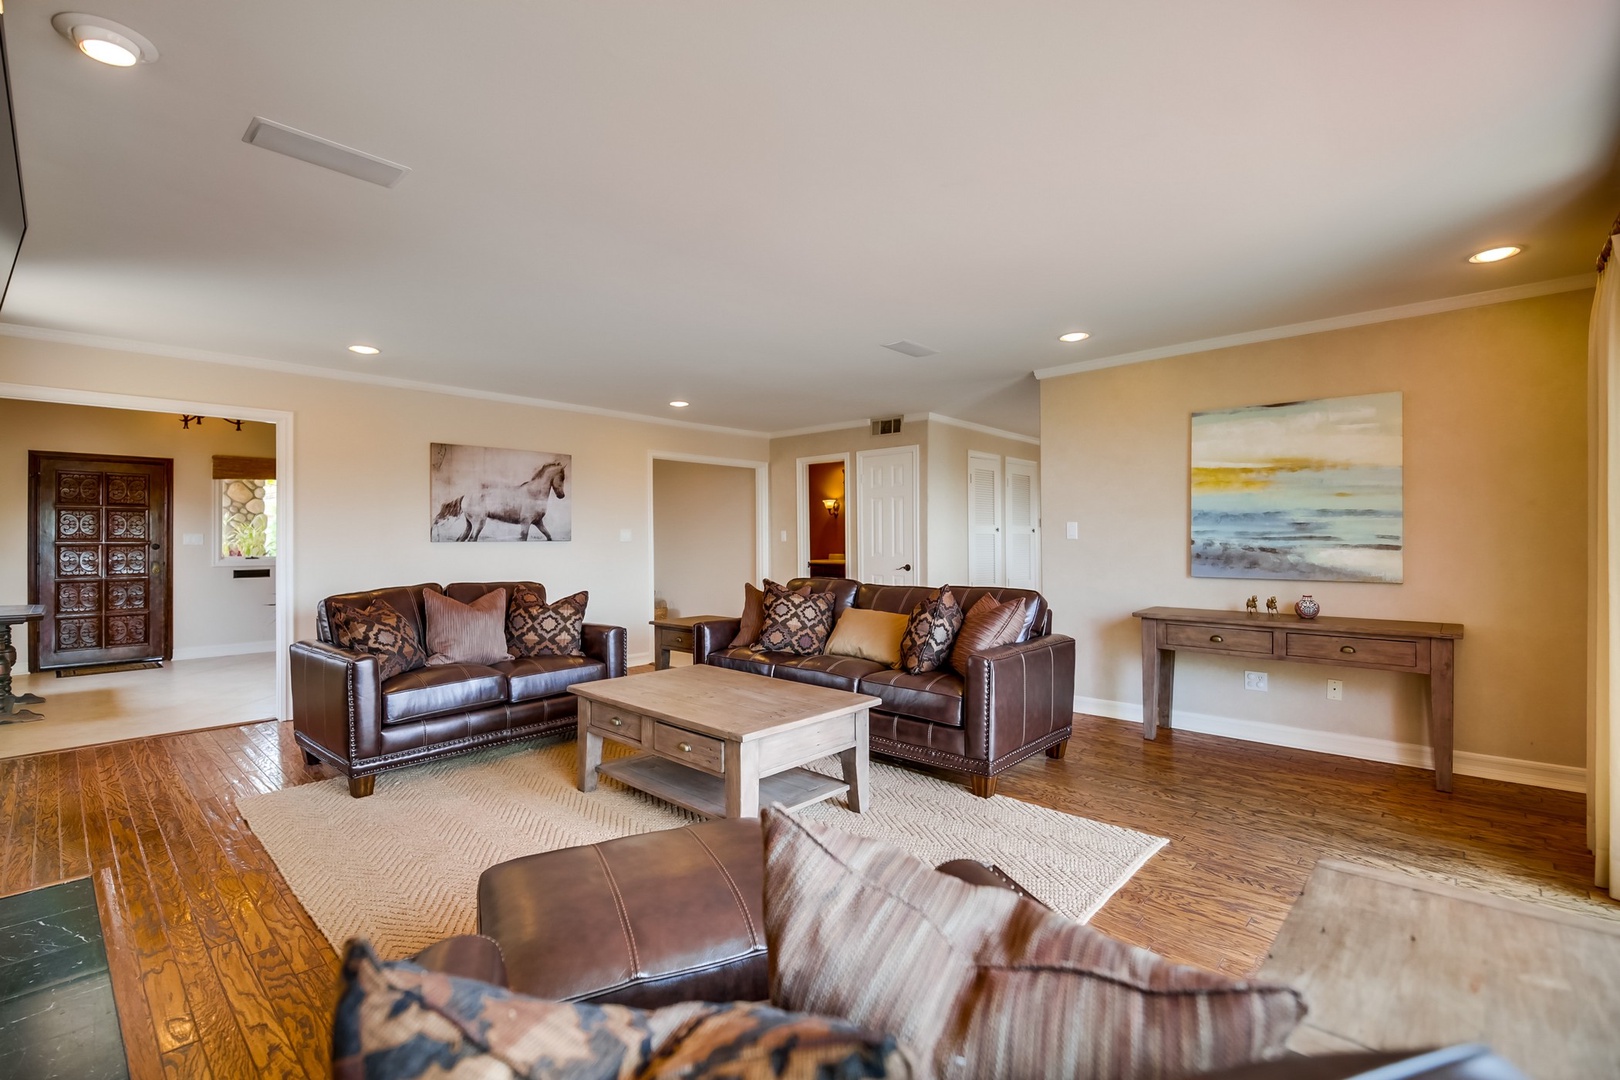 Living room with comfortable furnishings